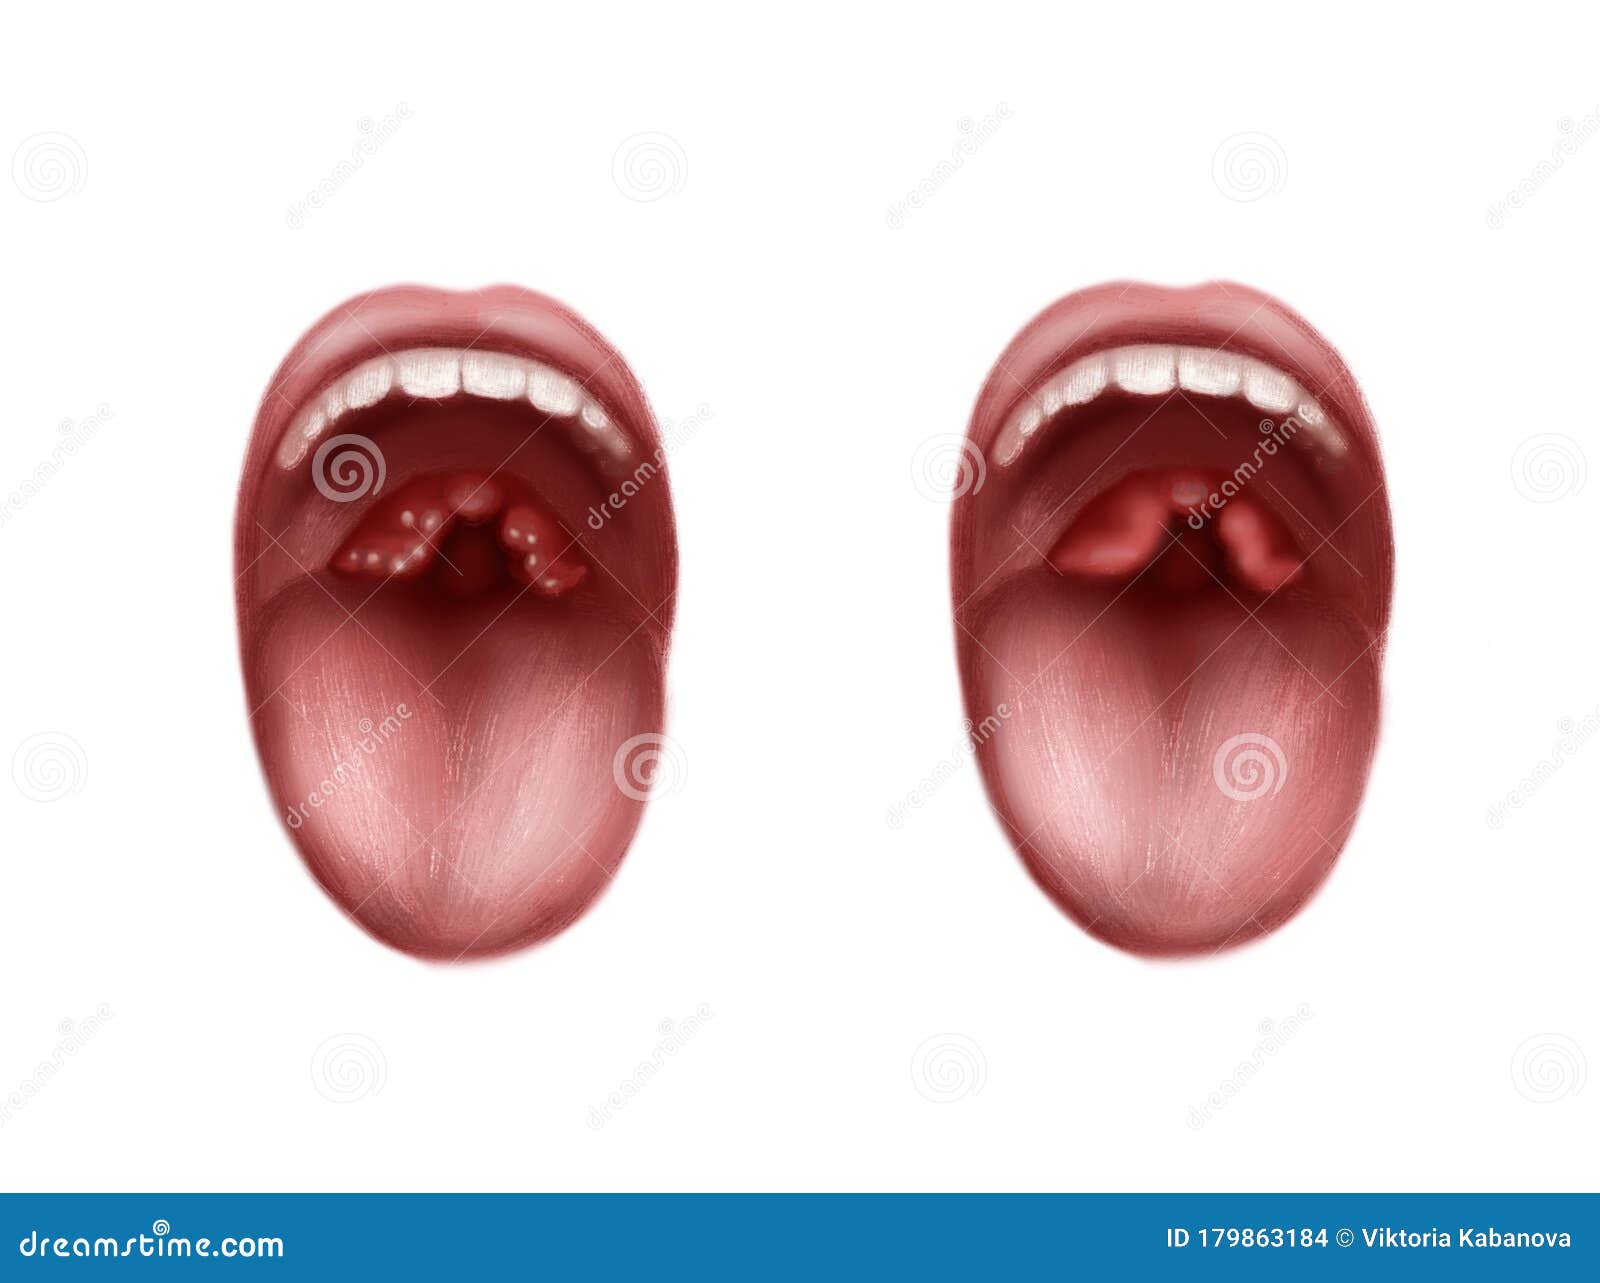 inflammatory diseases of the throat